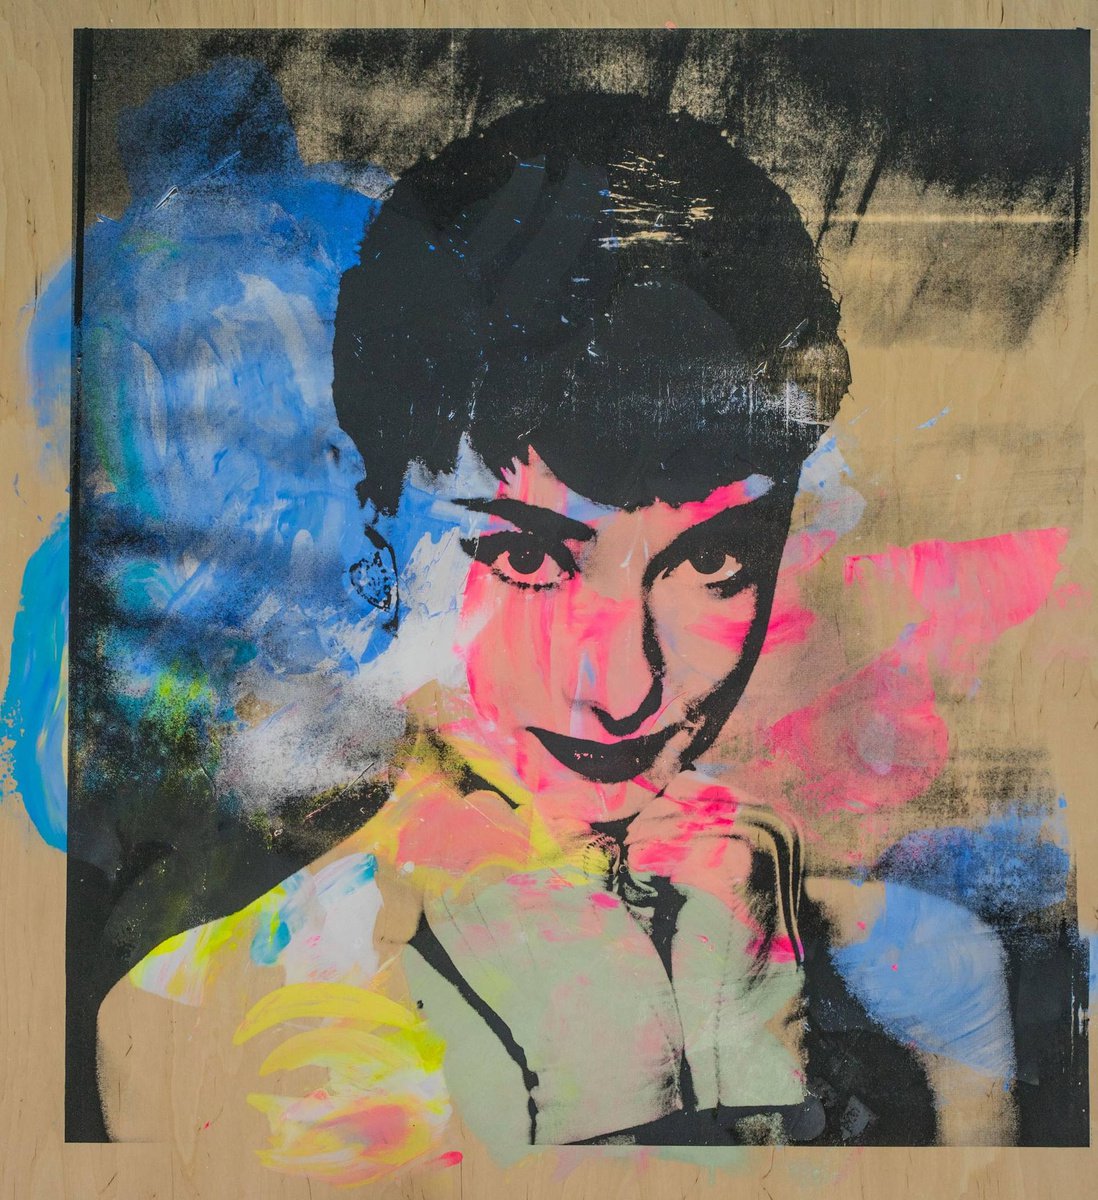 Audrey Hepburn by Dane Shue